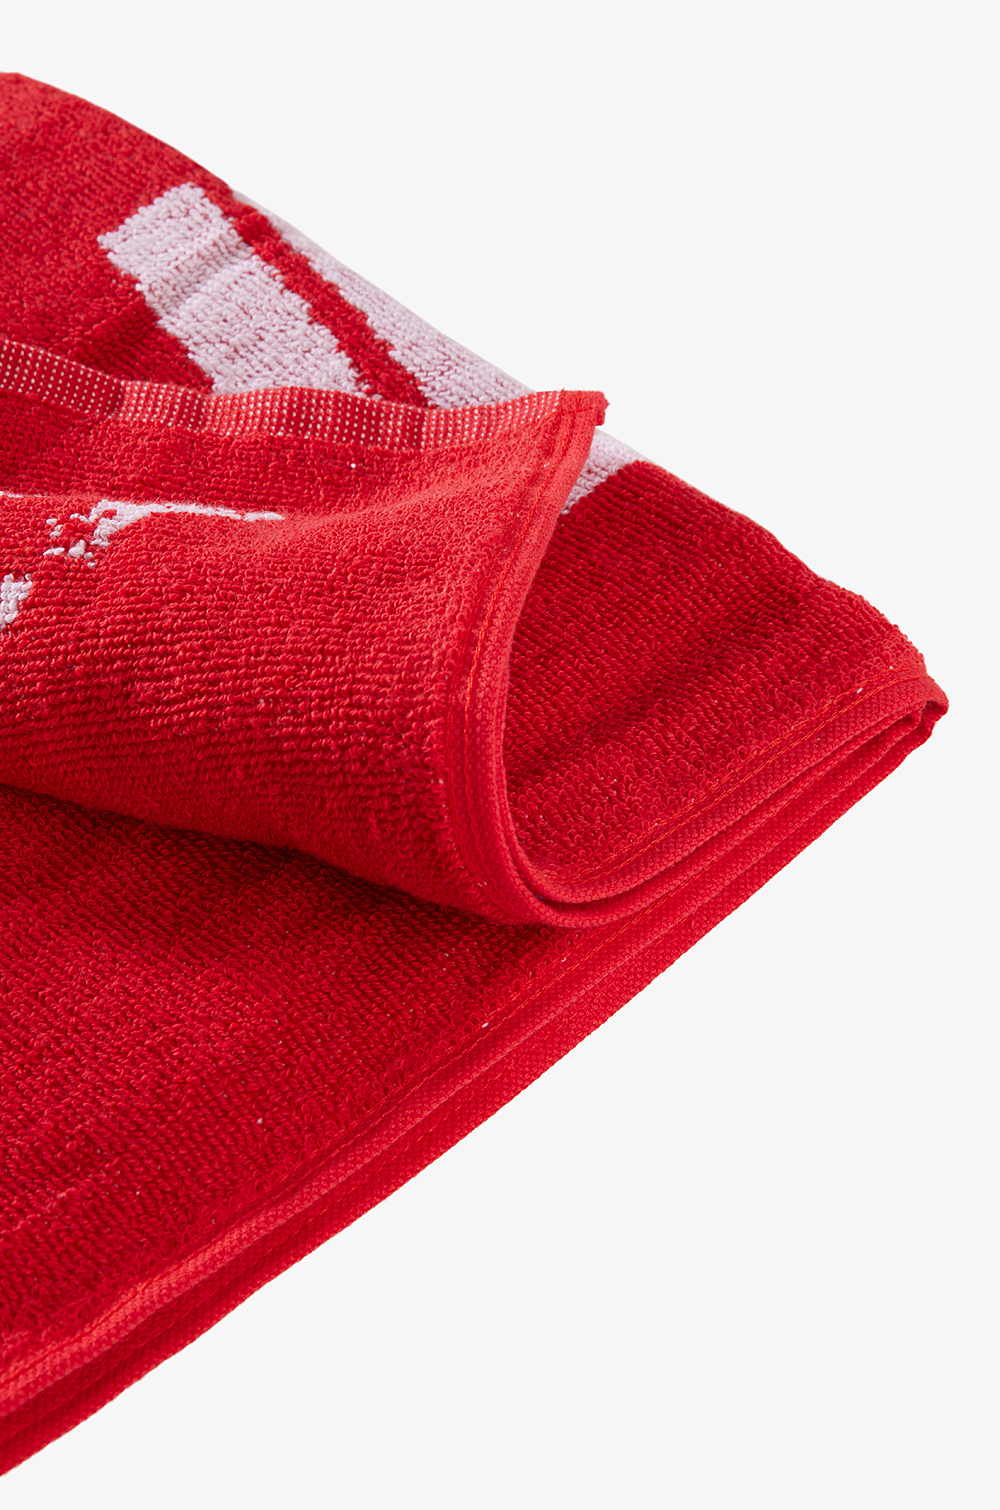 Towel Retro allstar (50x100cm)